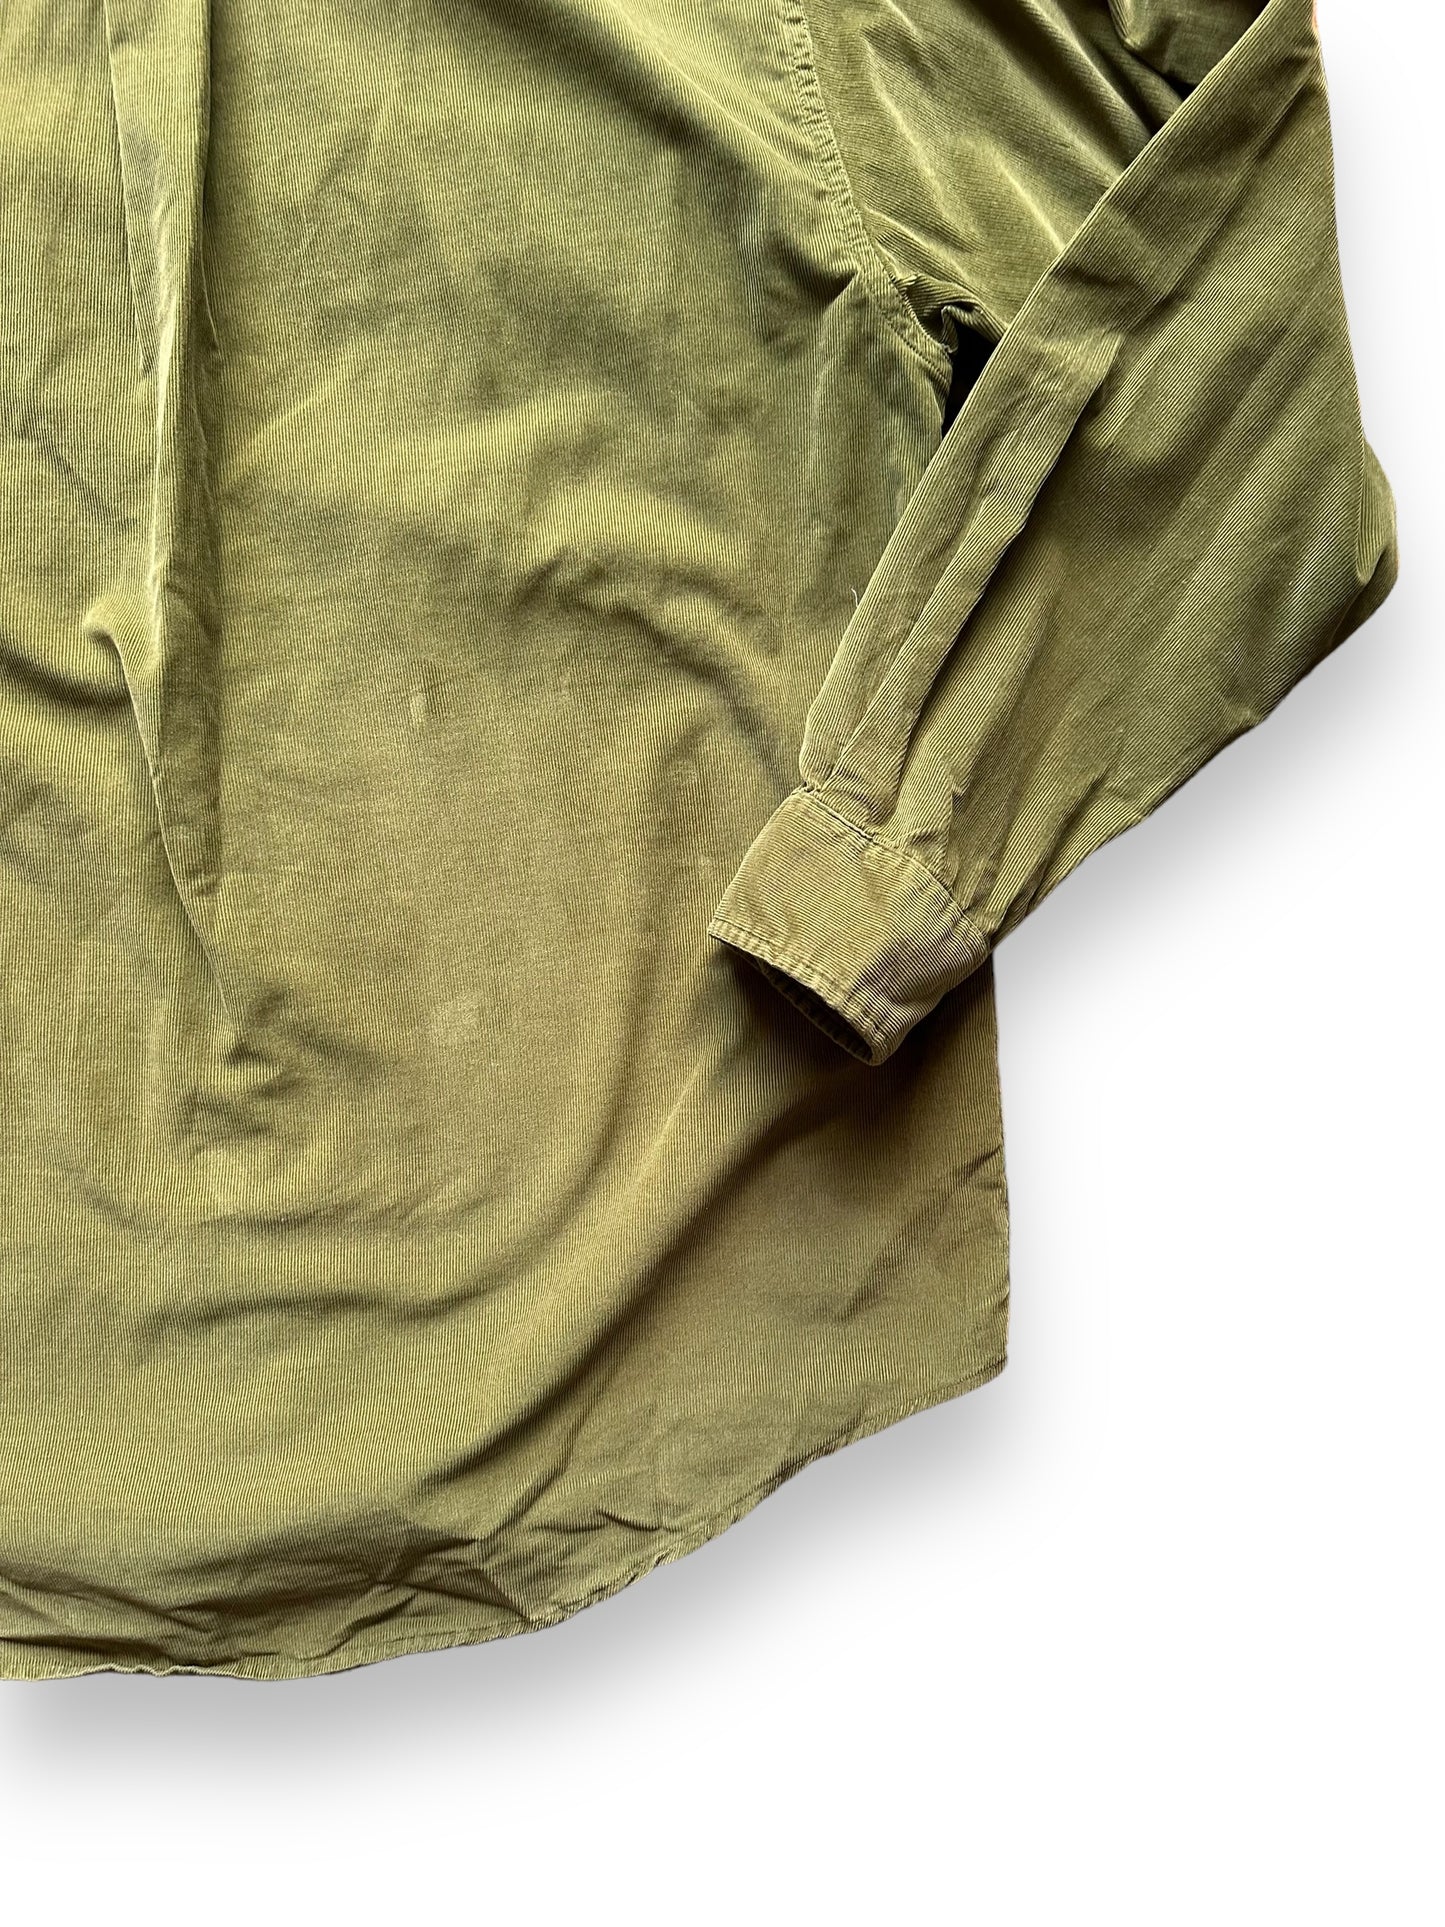 Filson Green Corduroy Shirt SZ M |  Barn Owl Vintage Goods Seattle | Filson Bargain Outlet